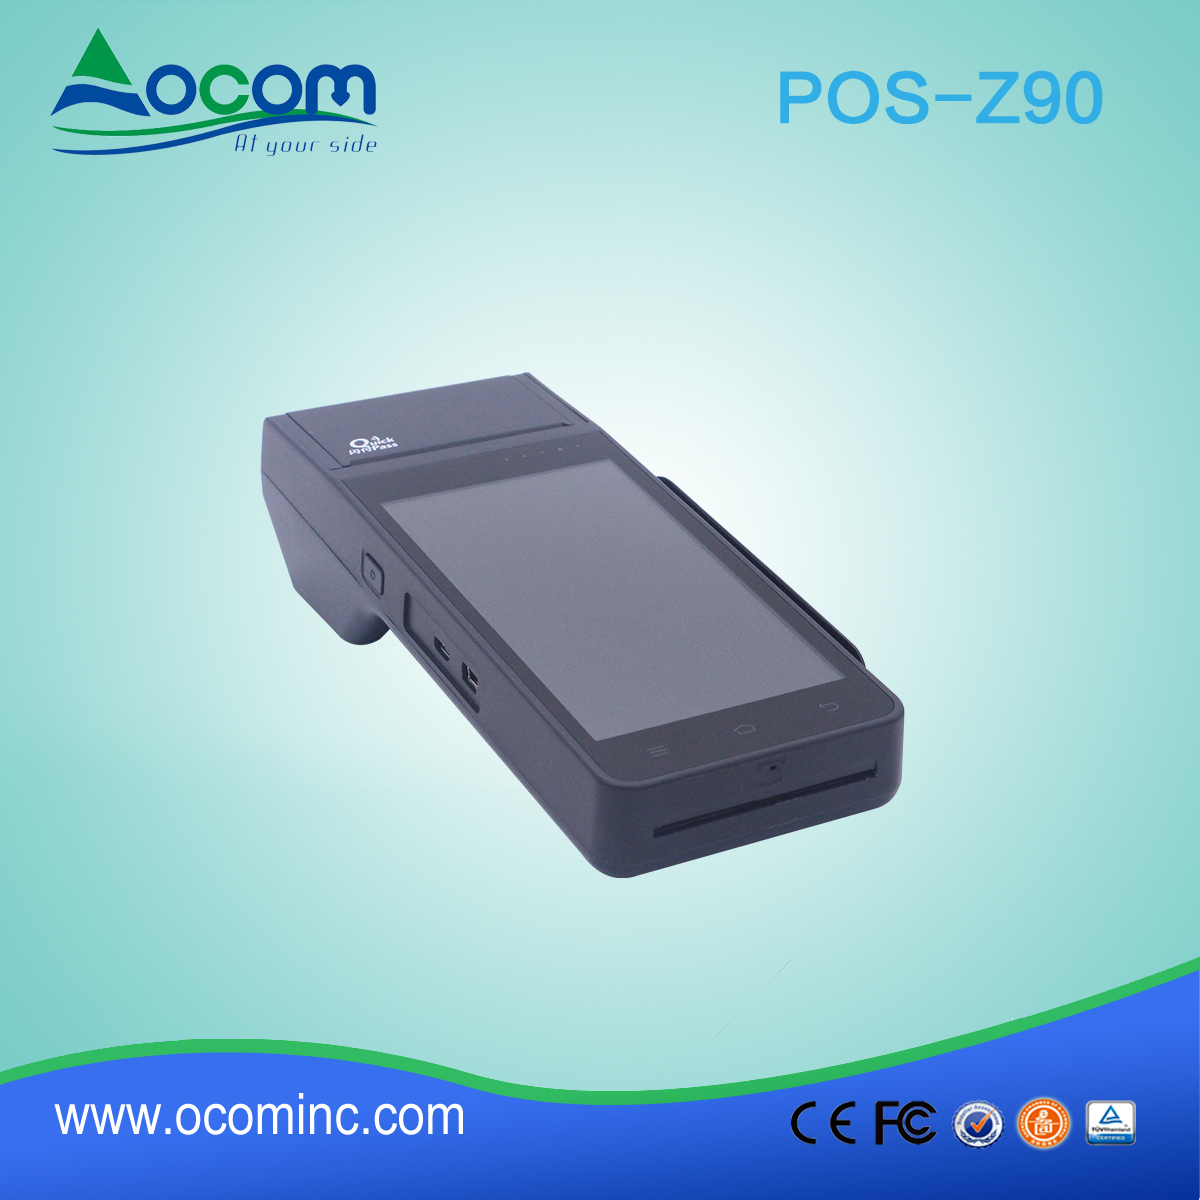 (POS-Z90) Basso costo androide palmare pos terminale con stampante termica